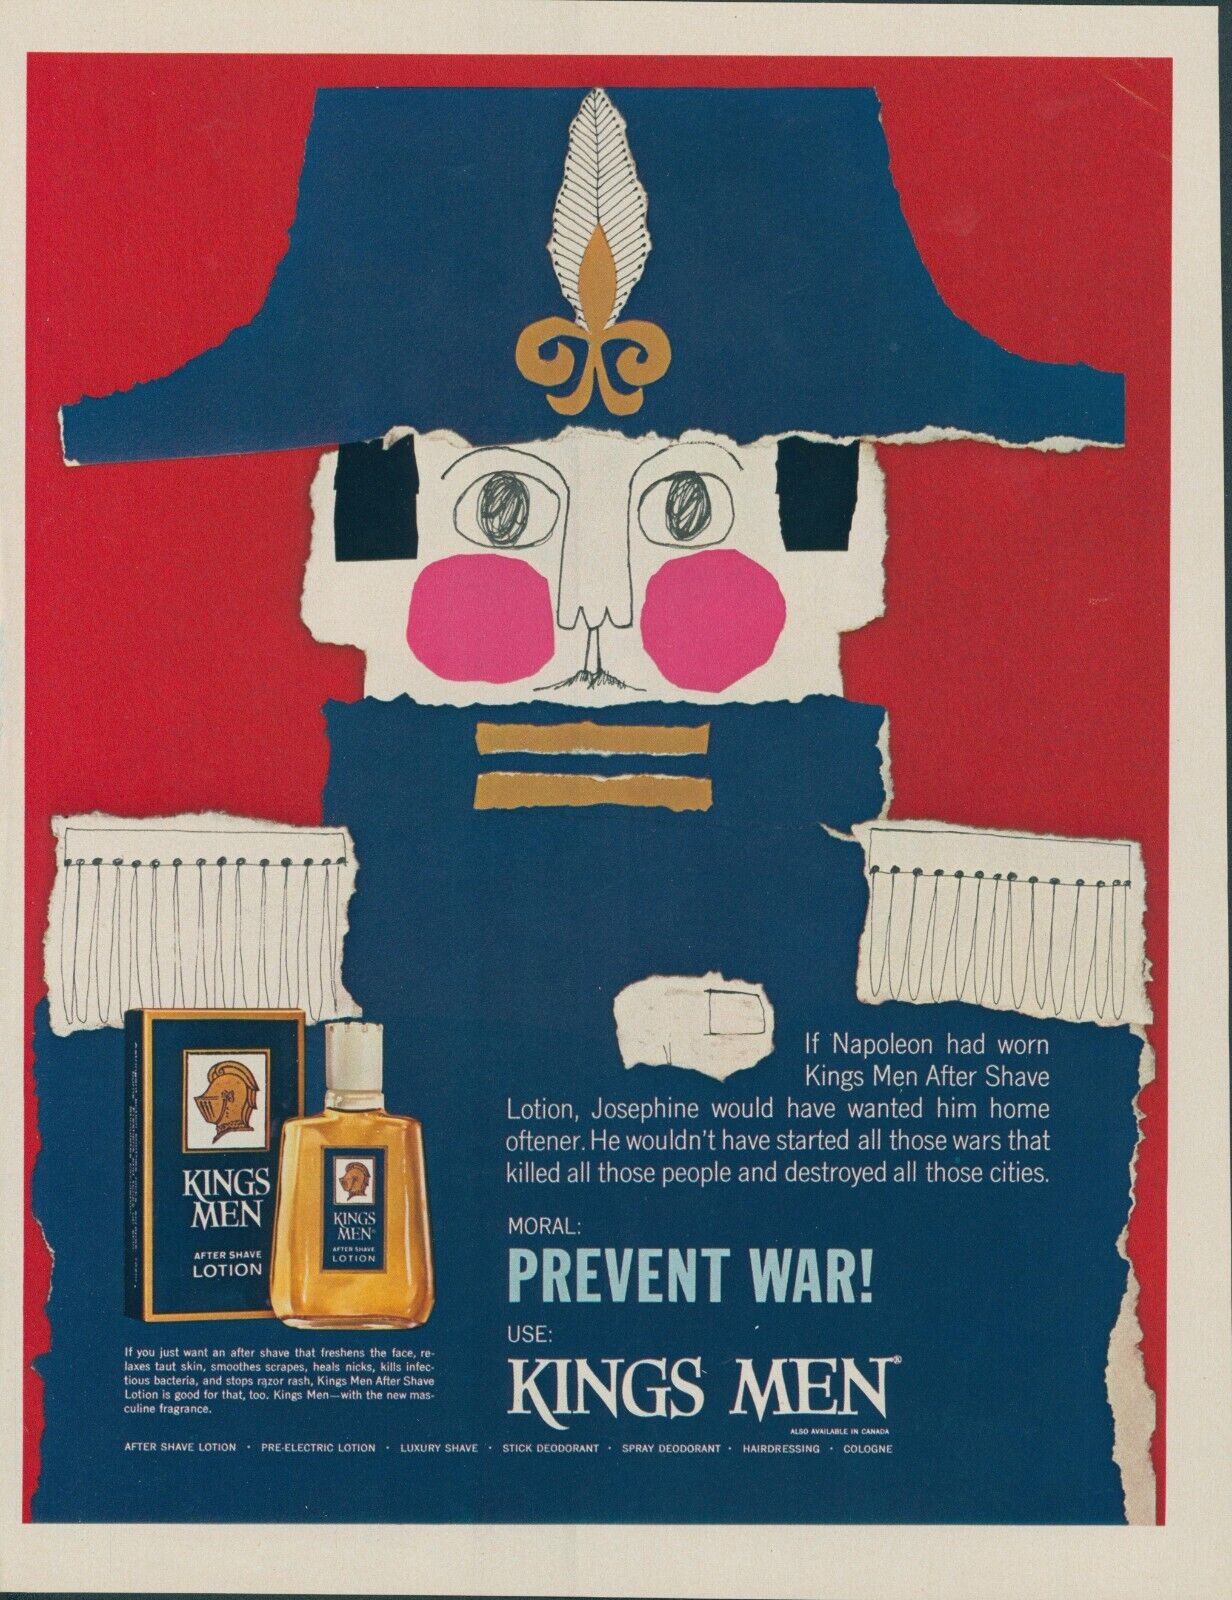 1963 Kings Men After Shave Lotion Napoleon Bonaparte Art Vintage Print Ad LO5